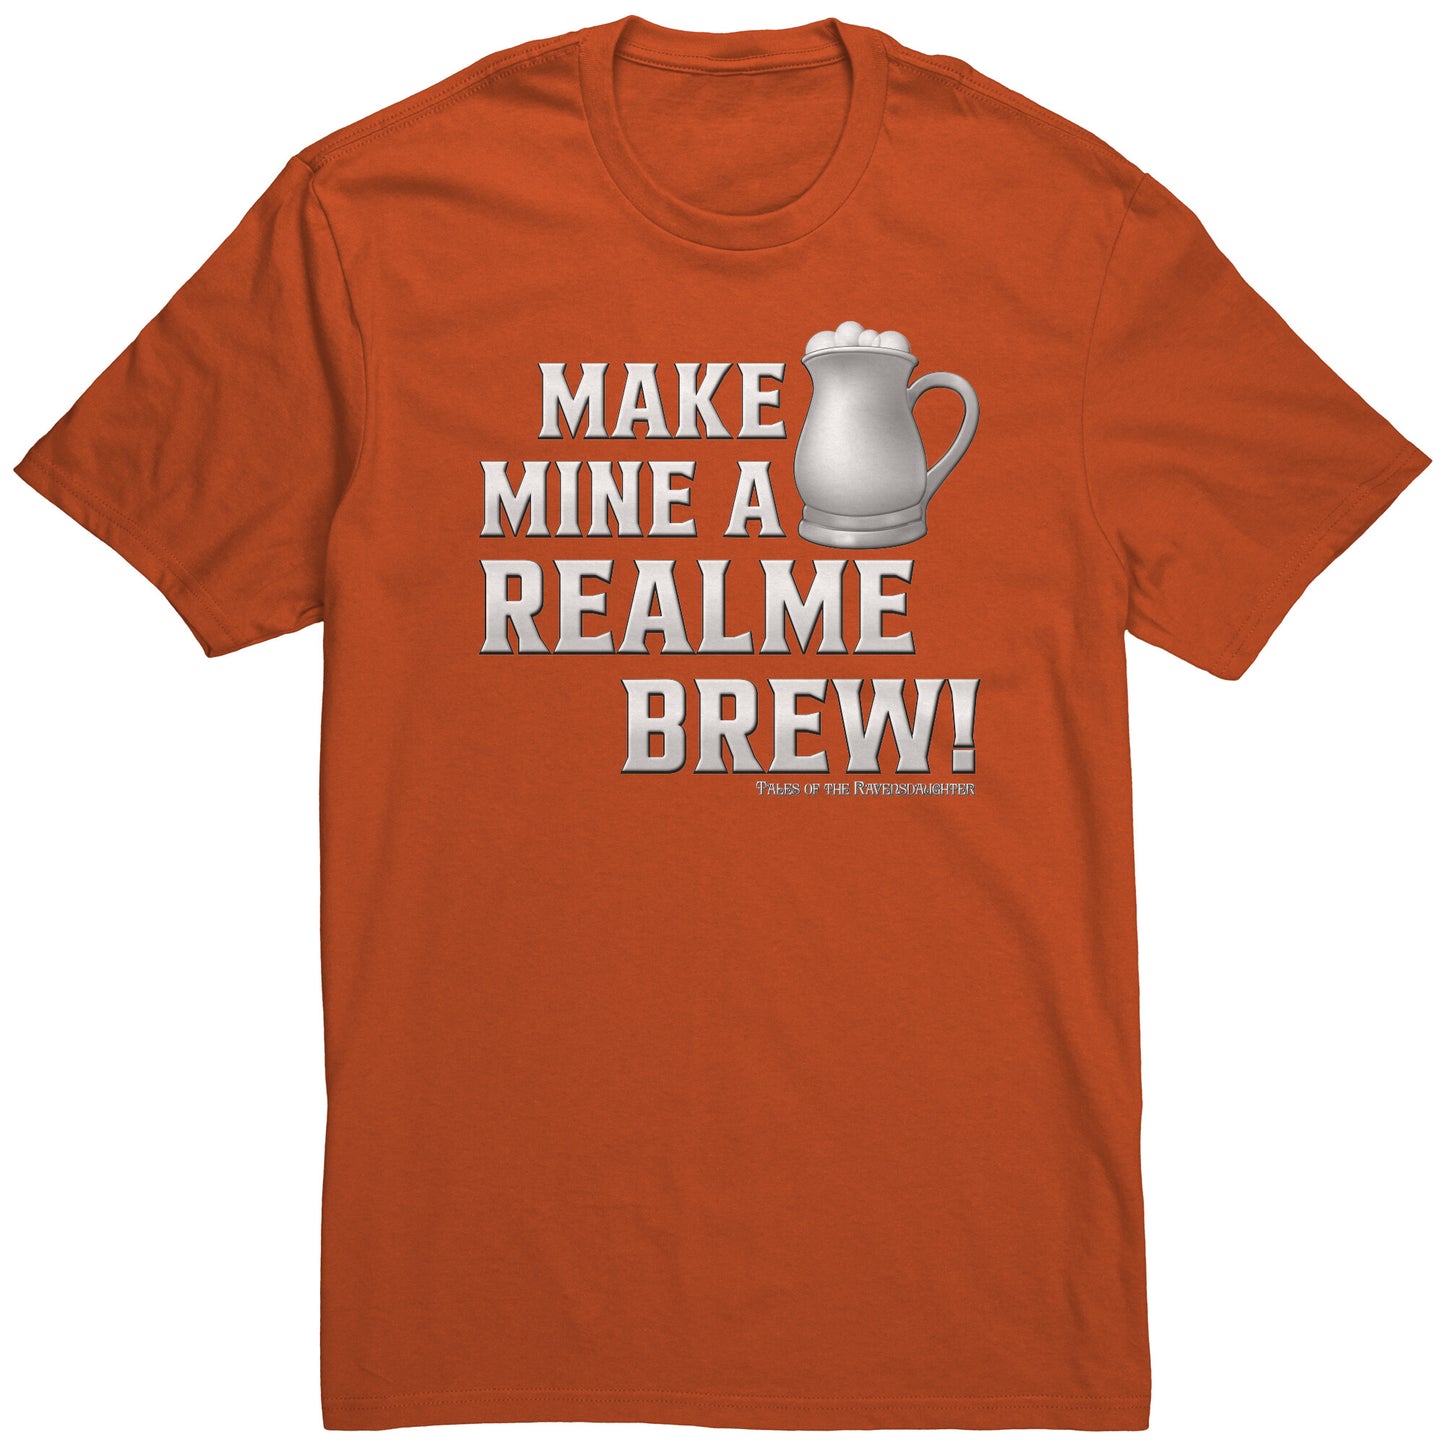 Make Mine A Realme Brew! Men's T-Shirt - Yellow-Orange-Red